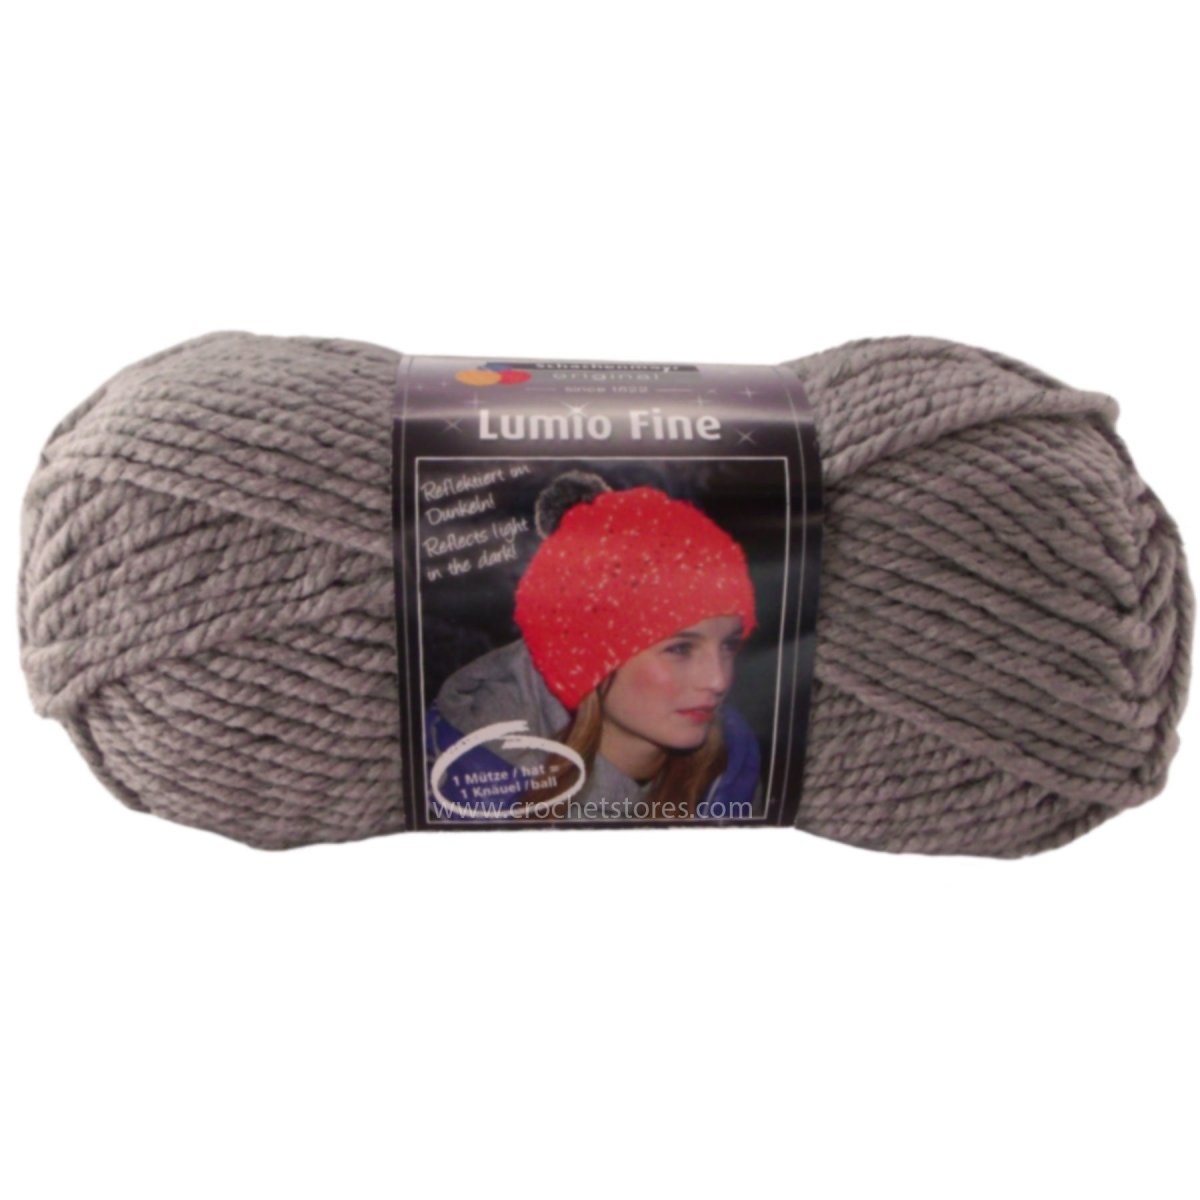 LUMIO FINE - Crochetstores9807557-1904053859053556